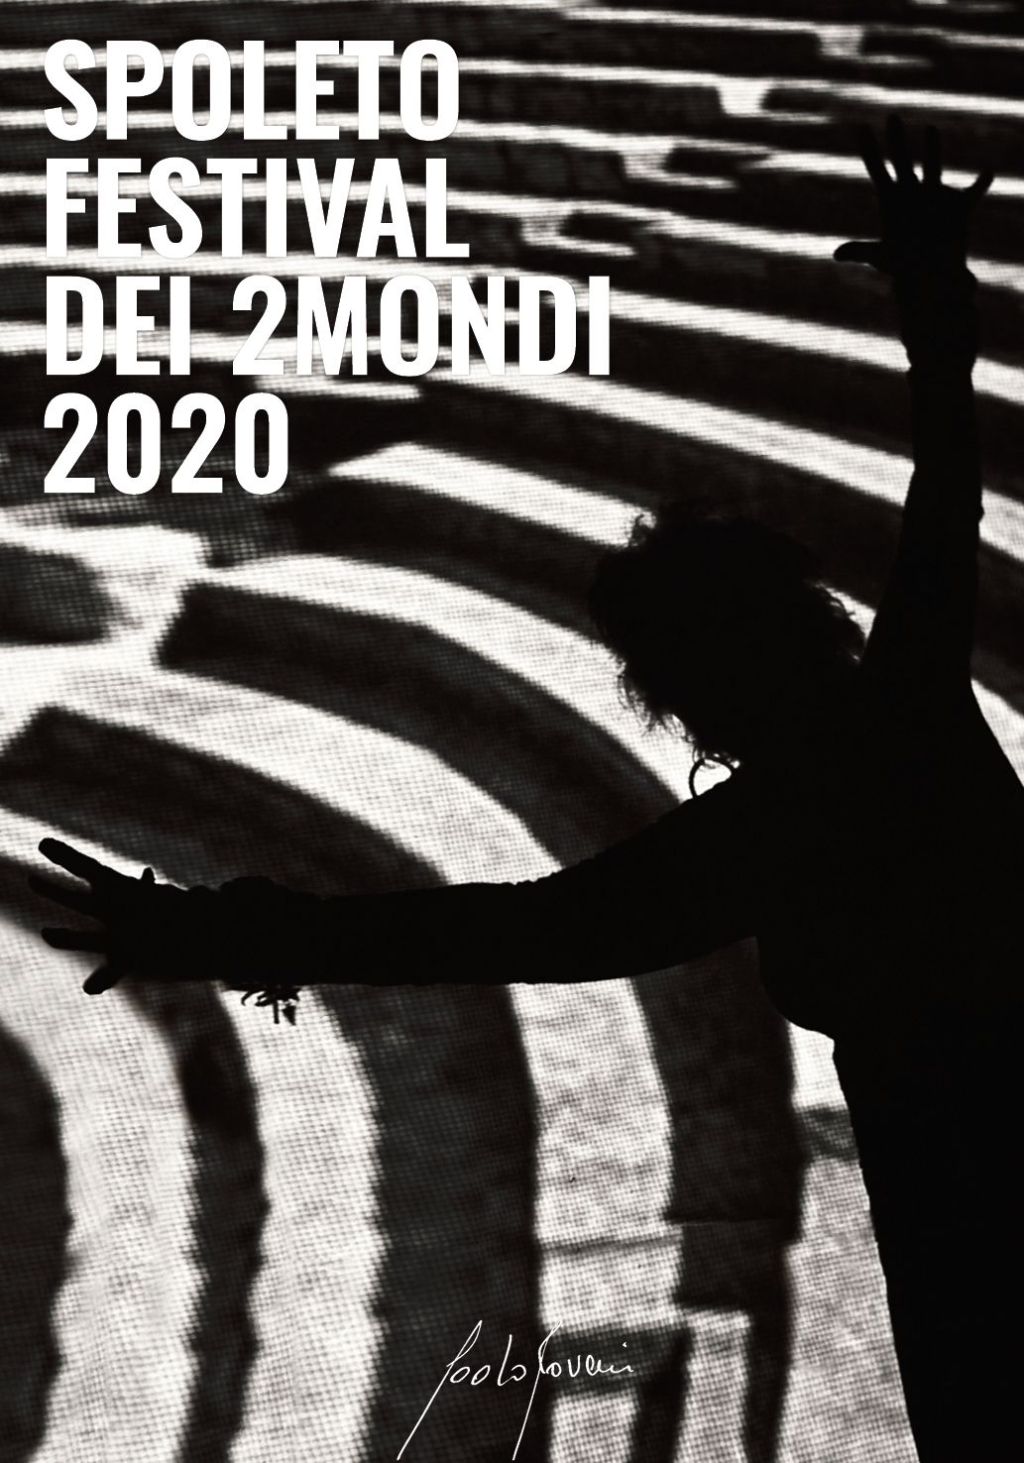 Festival di Spoleto, manifesto 2020